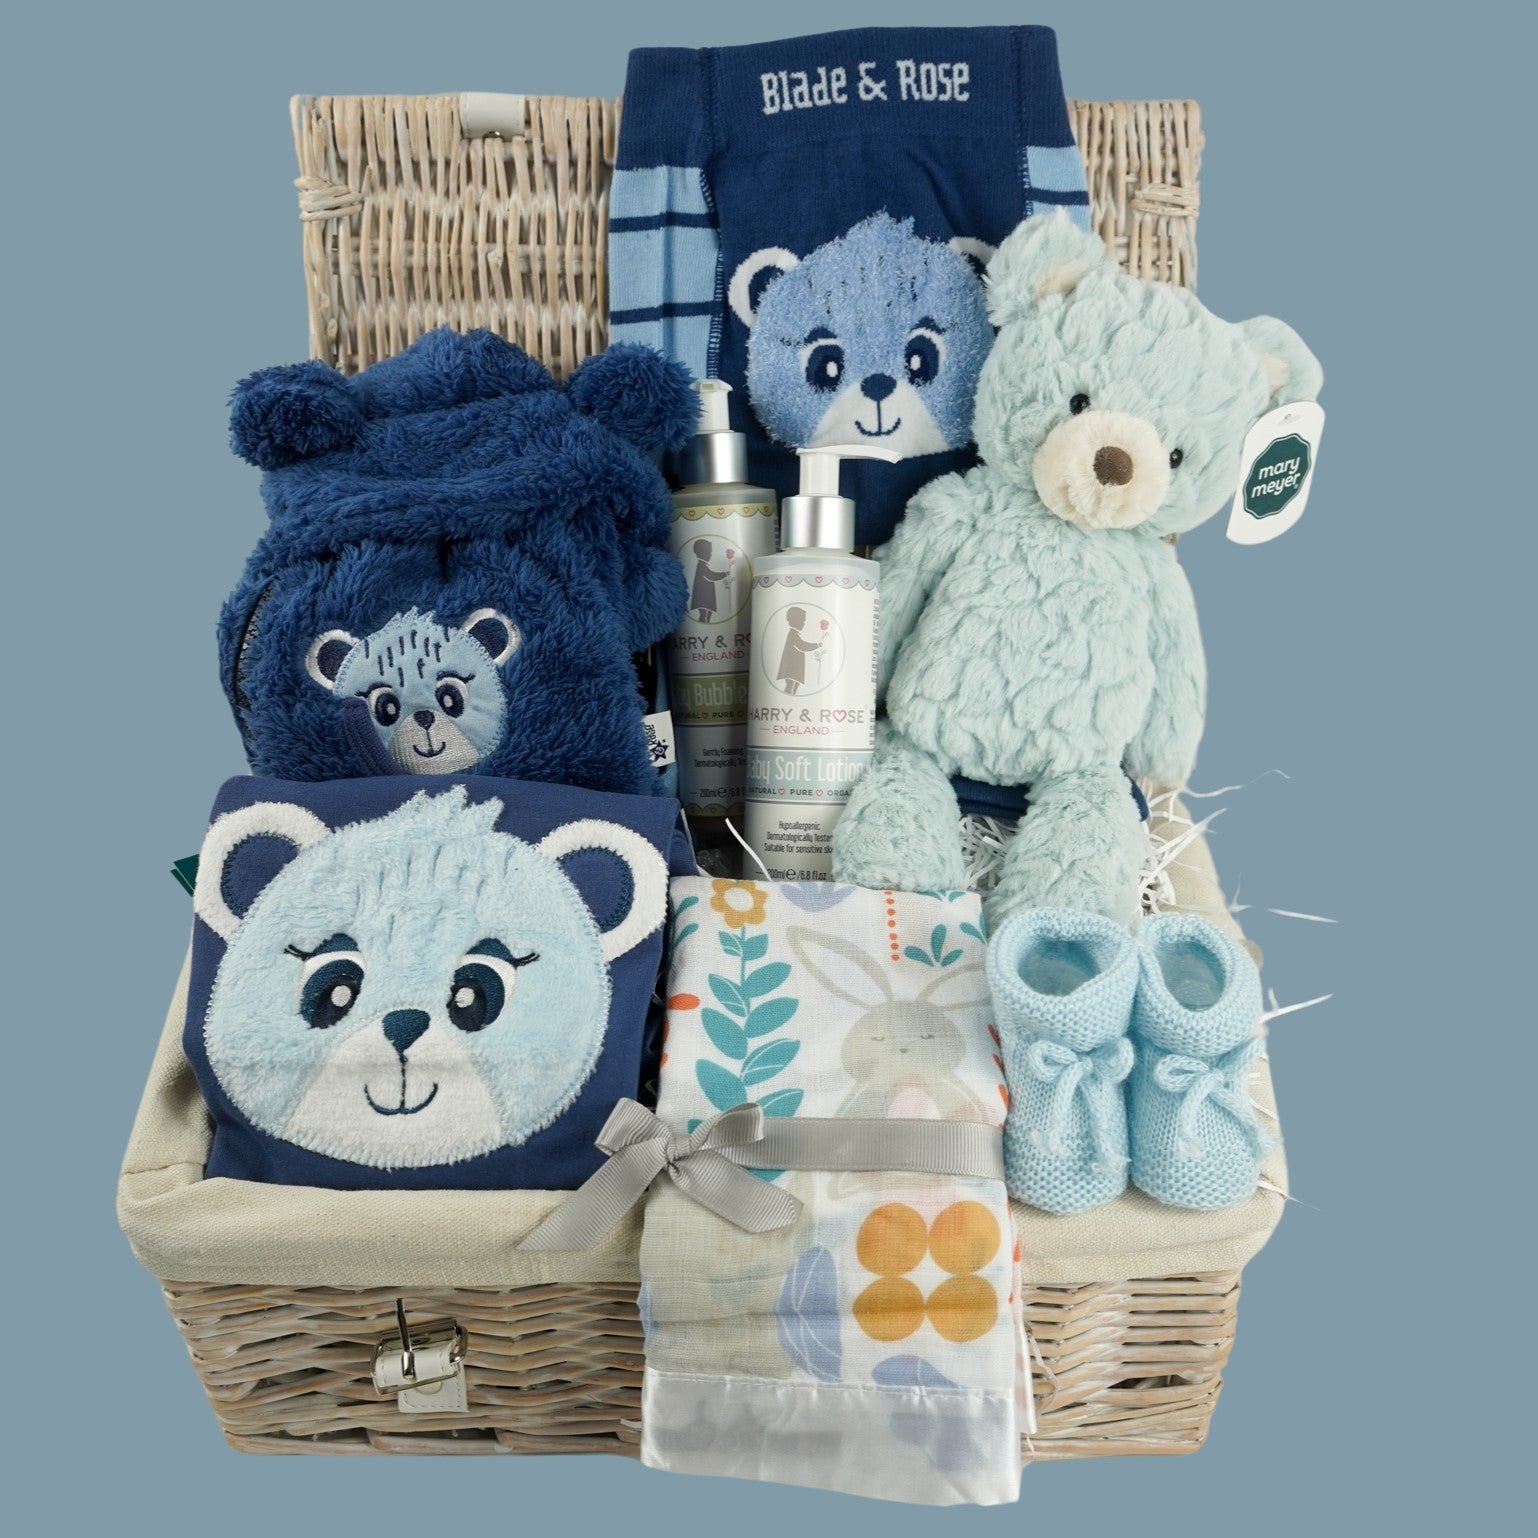 Newborn Baby Gifts | Gifts for Newborn Baby Boy or Girl Online